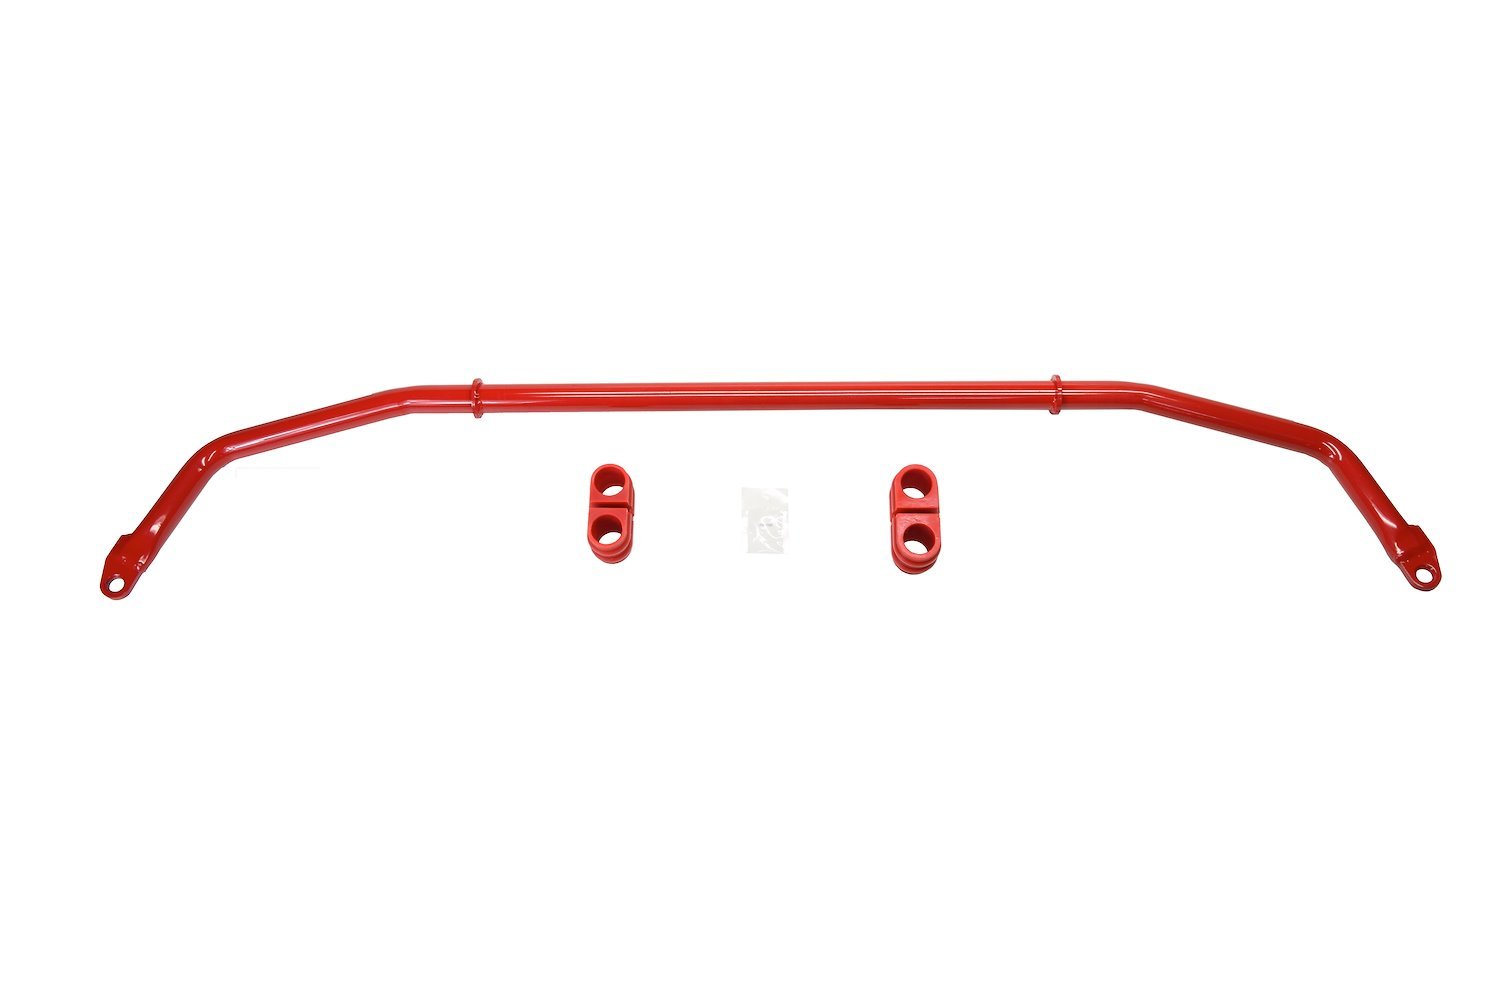 PED-429021-32 Sway Bar, Rear, Camaro 2013-2015, 32 mm